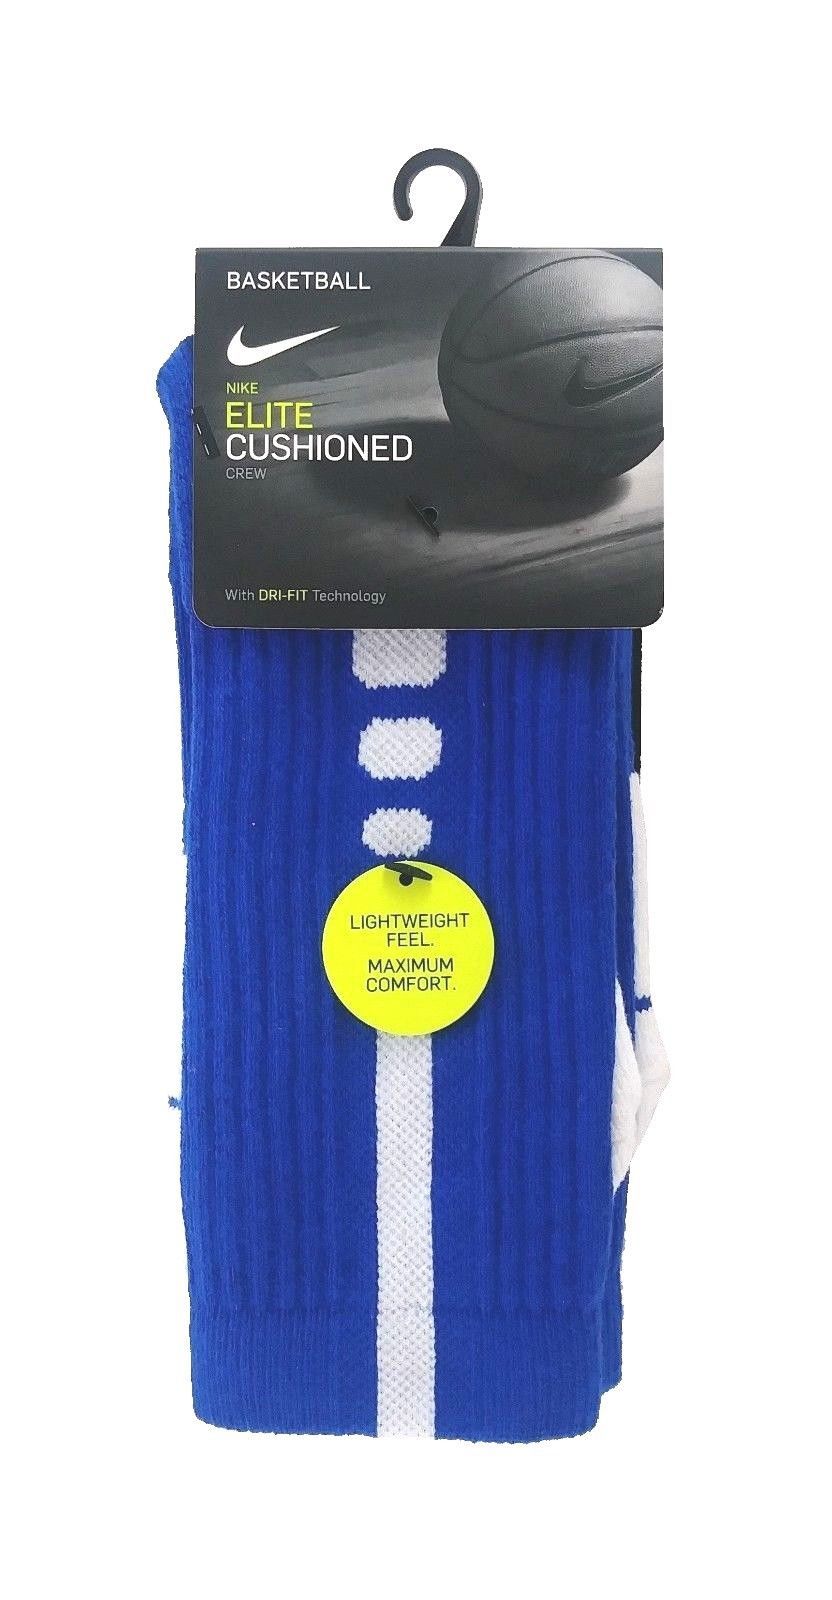 NIKE Elite Cushioned Basketball Crew Socks sz M Medium (6-8) Royal Blue White - $24.80